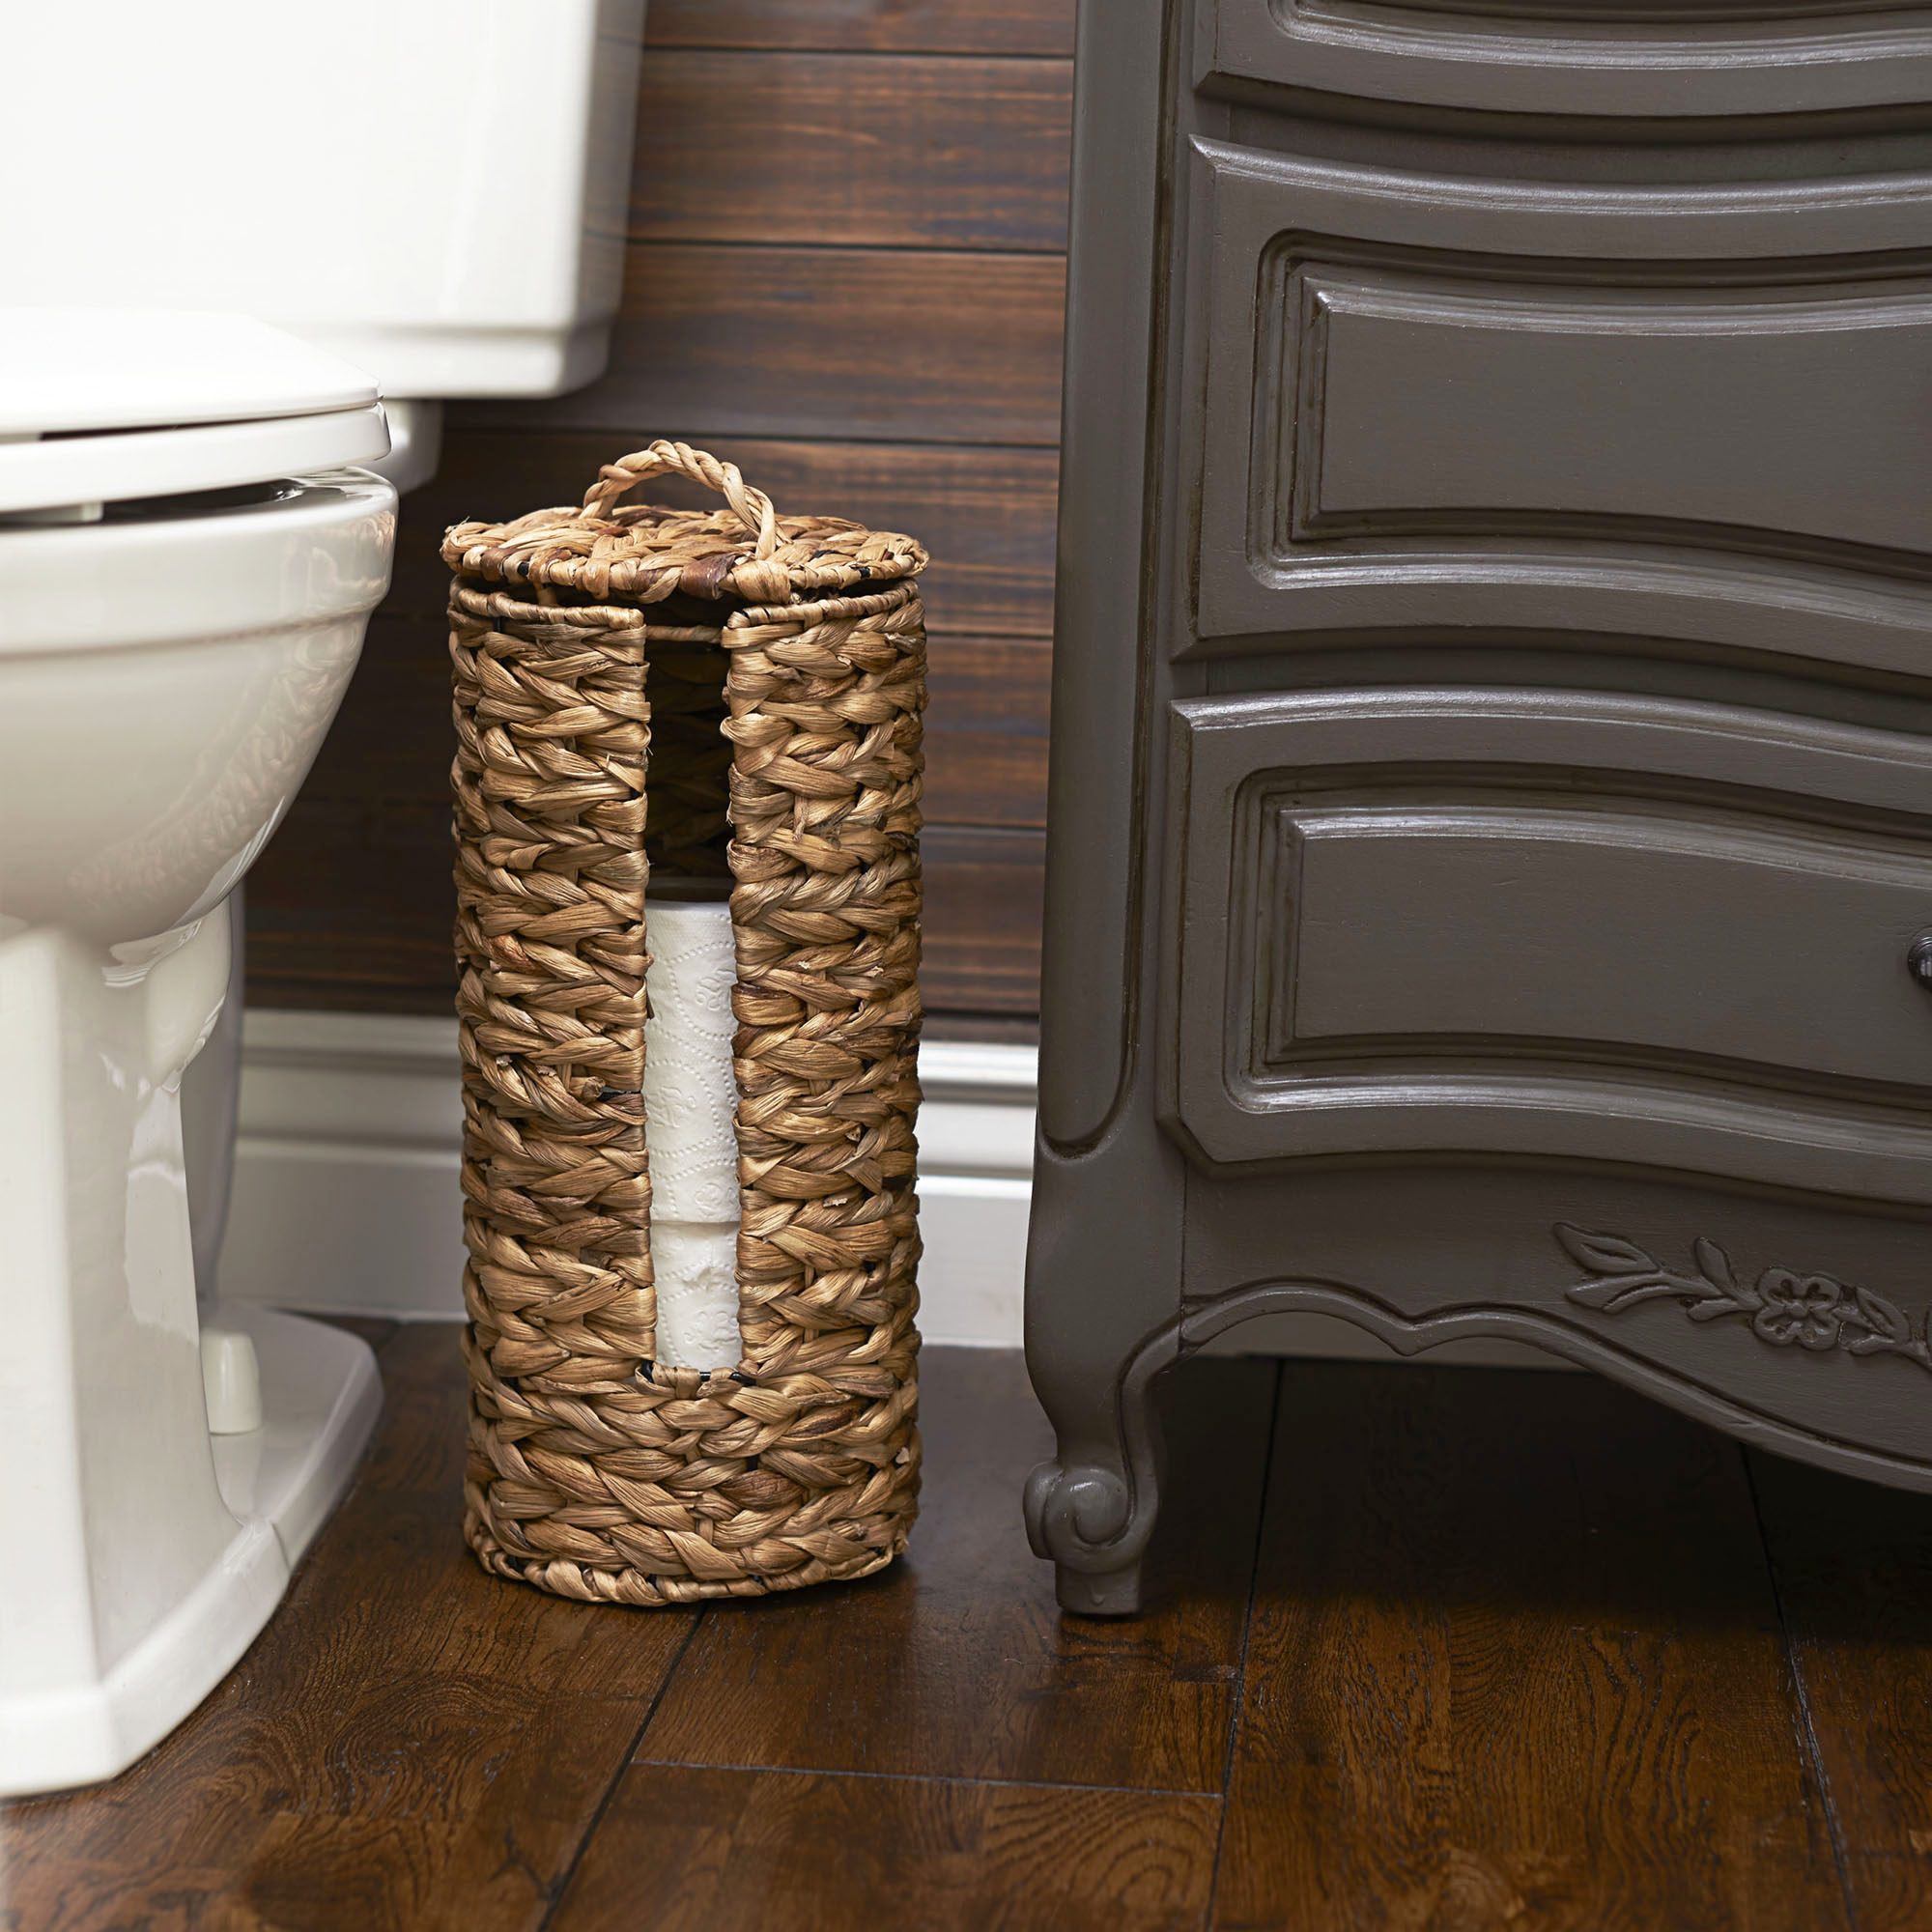 Freestanding Toilet Paper Holder with Lid, Wicker Toilet Roll Holder,  Bathroom Storage Basket, Round, Natural